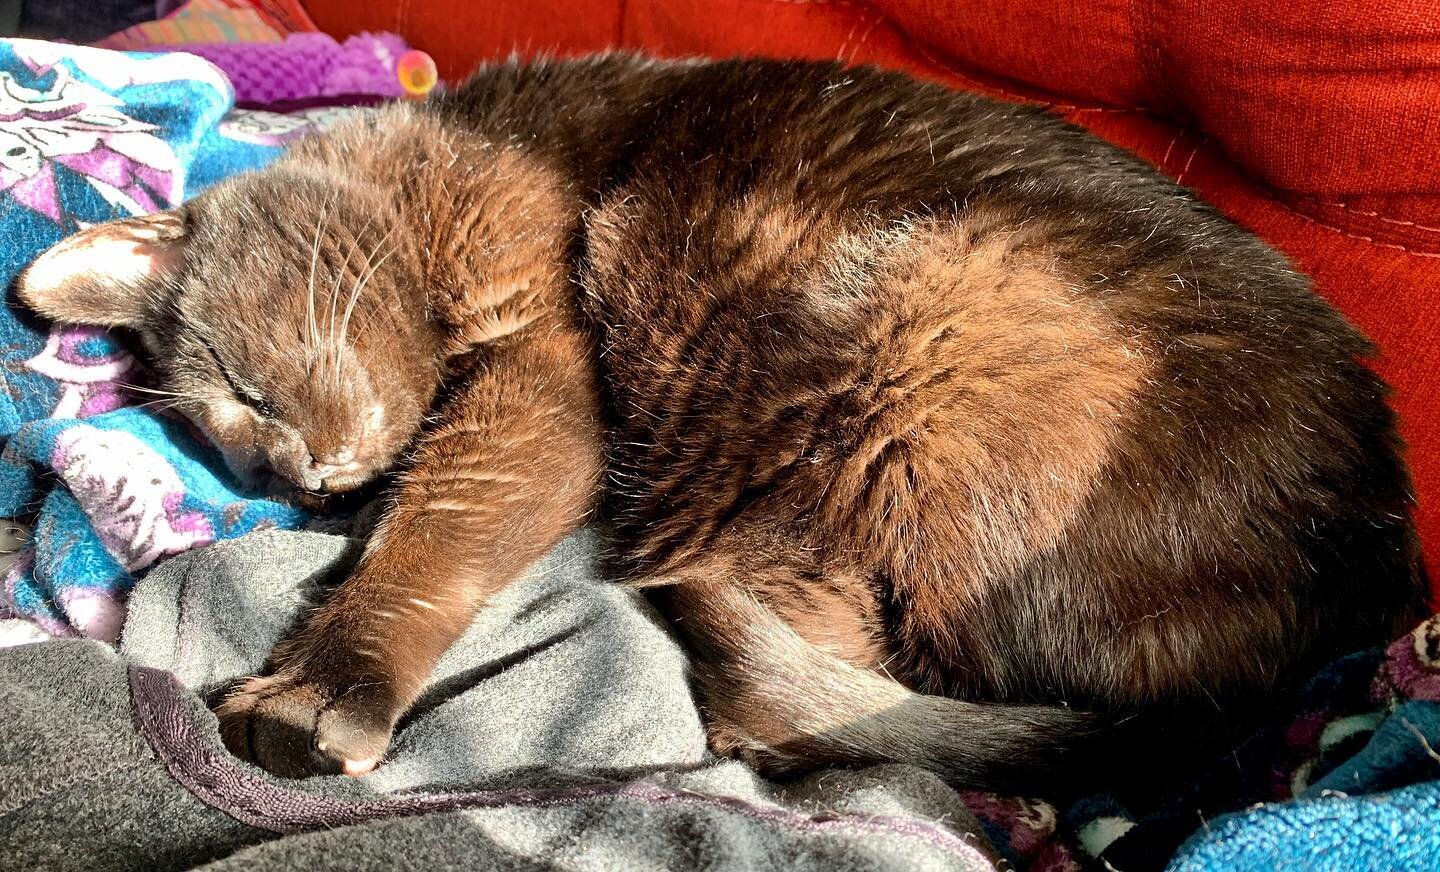 Coalie Bear: I can haz sunbeam! #herecomesthesun #blackcatsofinstagram #rescuecatsofinstagram #vitamind #sunbathingcat #chicagocats